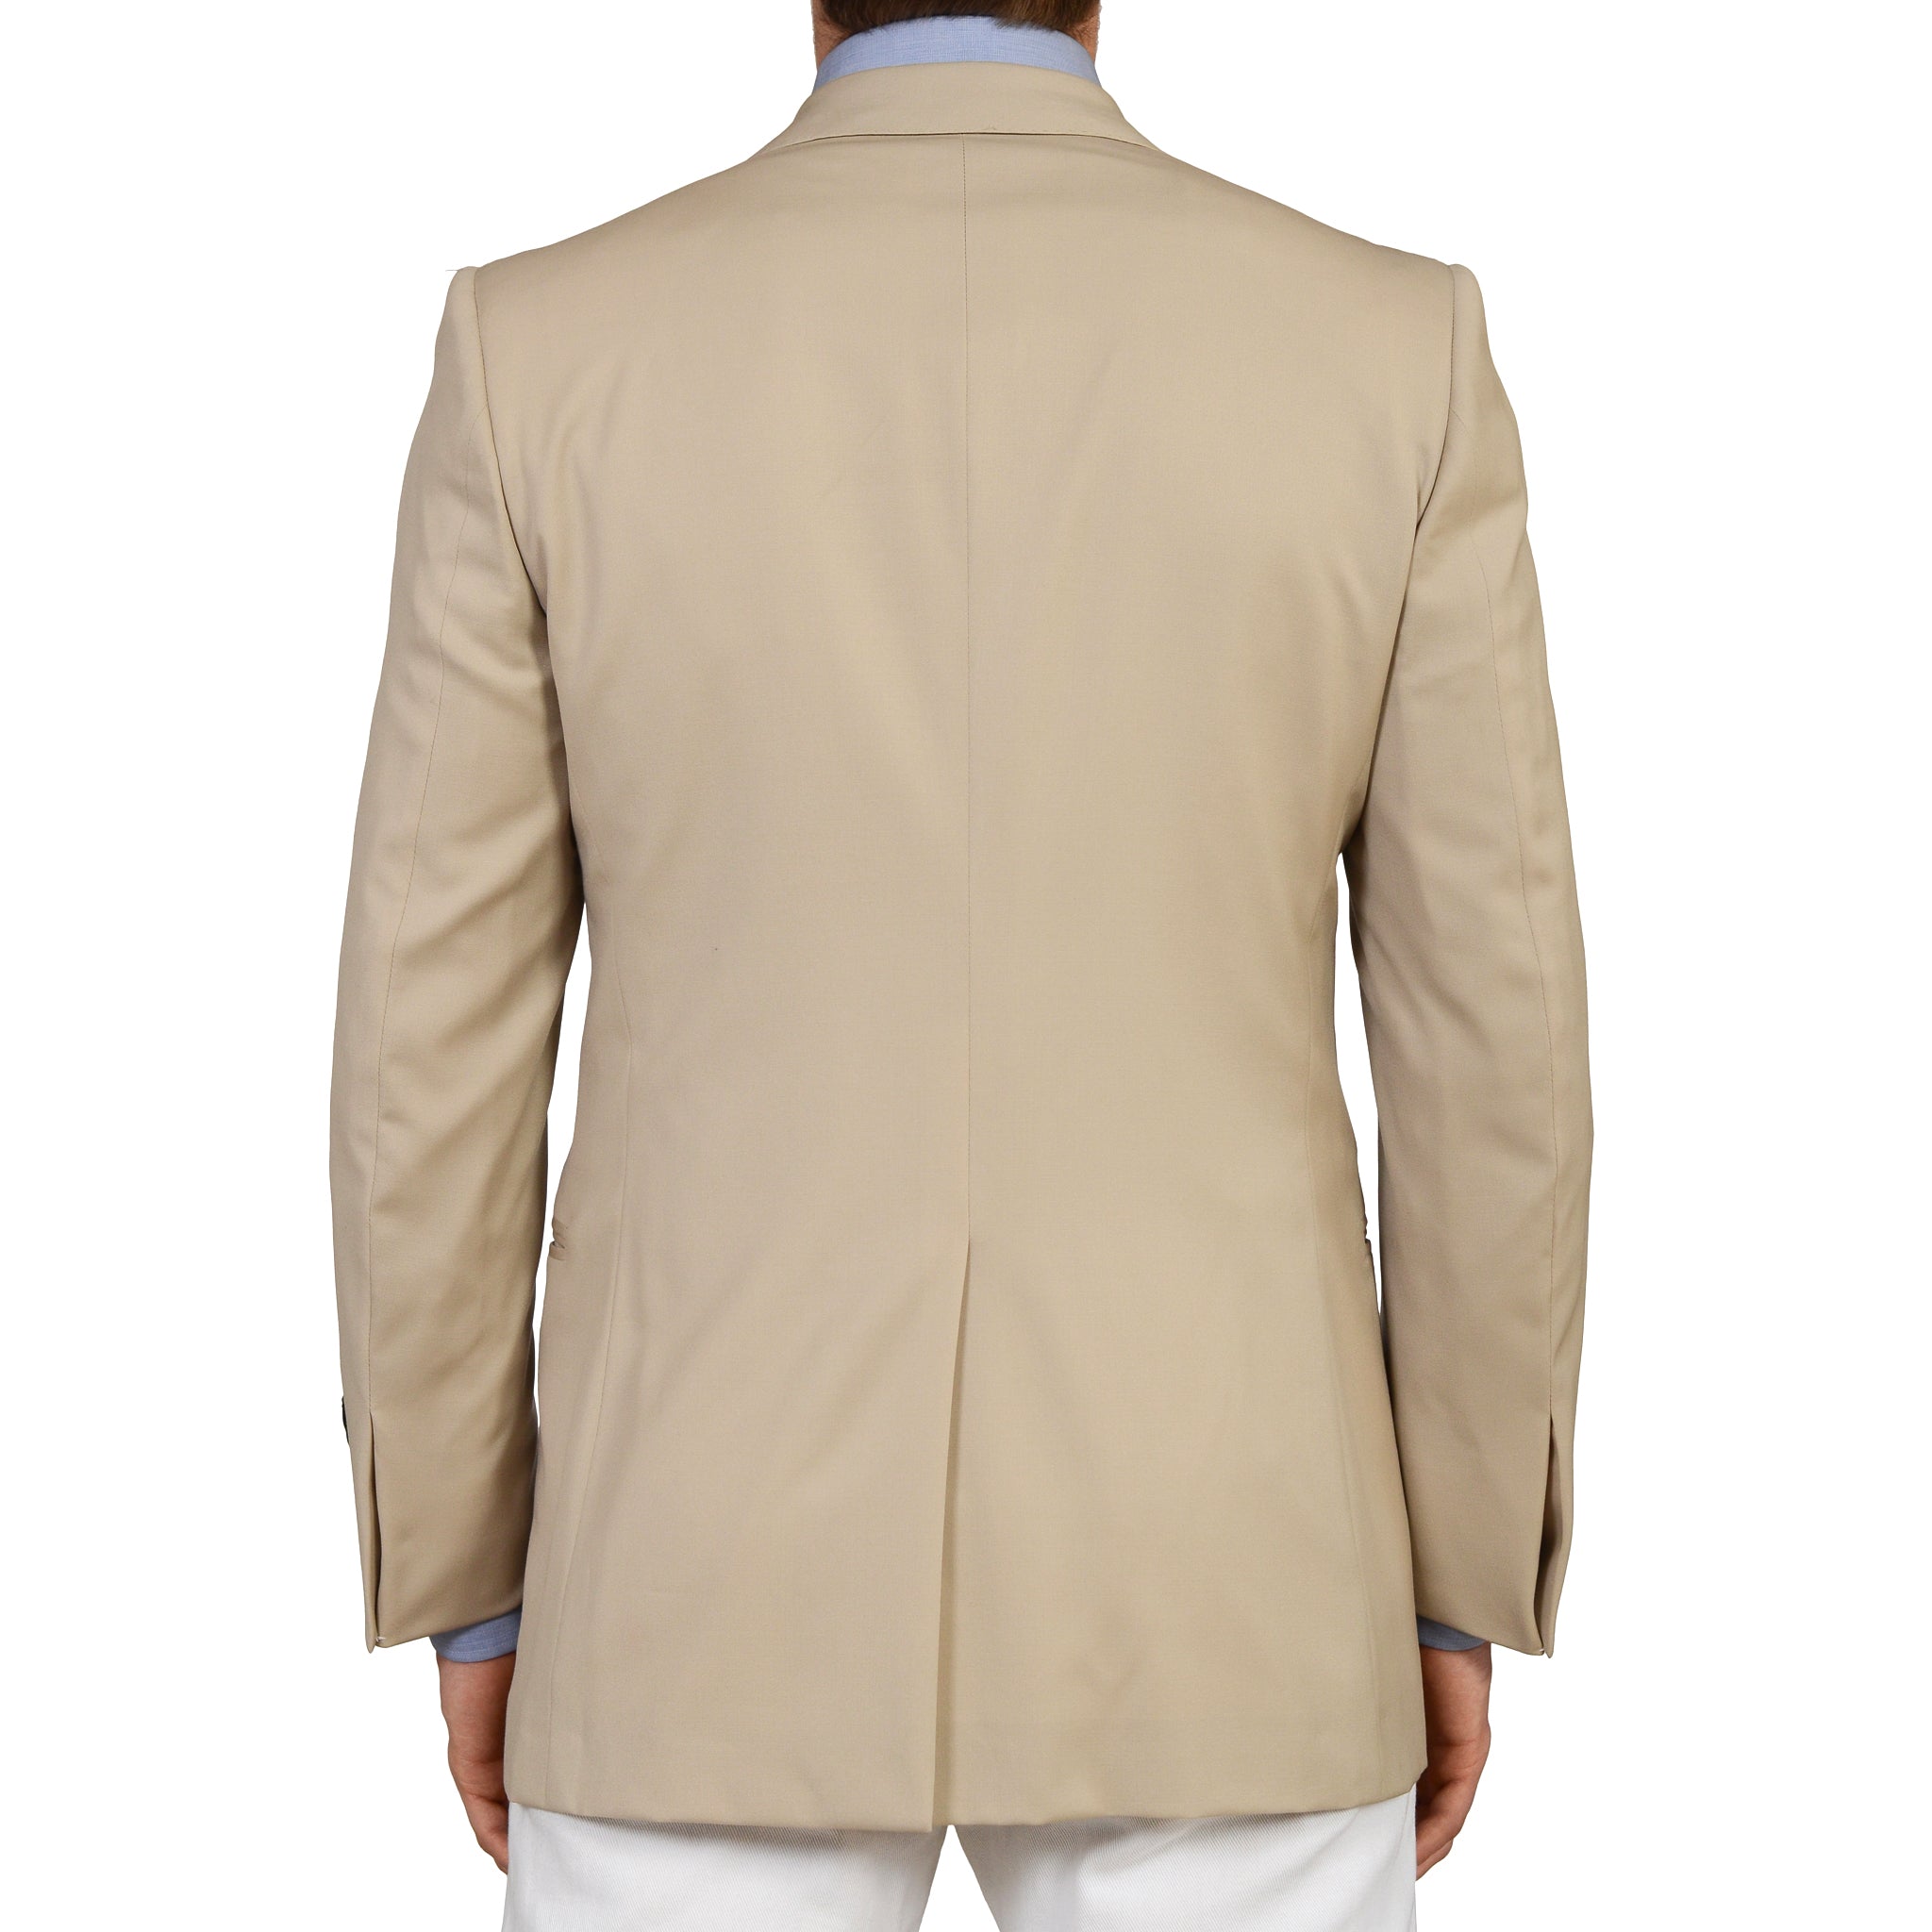 D'AVENZA Roma Handmade Beige Wool Super 120's Blazer Jacket EU 50 NEW US 40 D'AVENZA